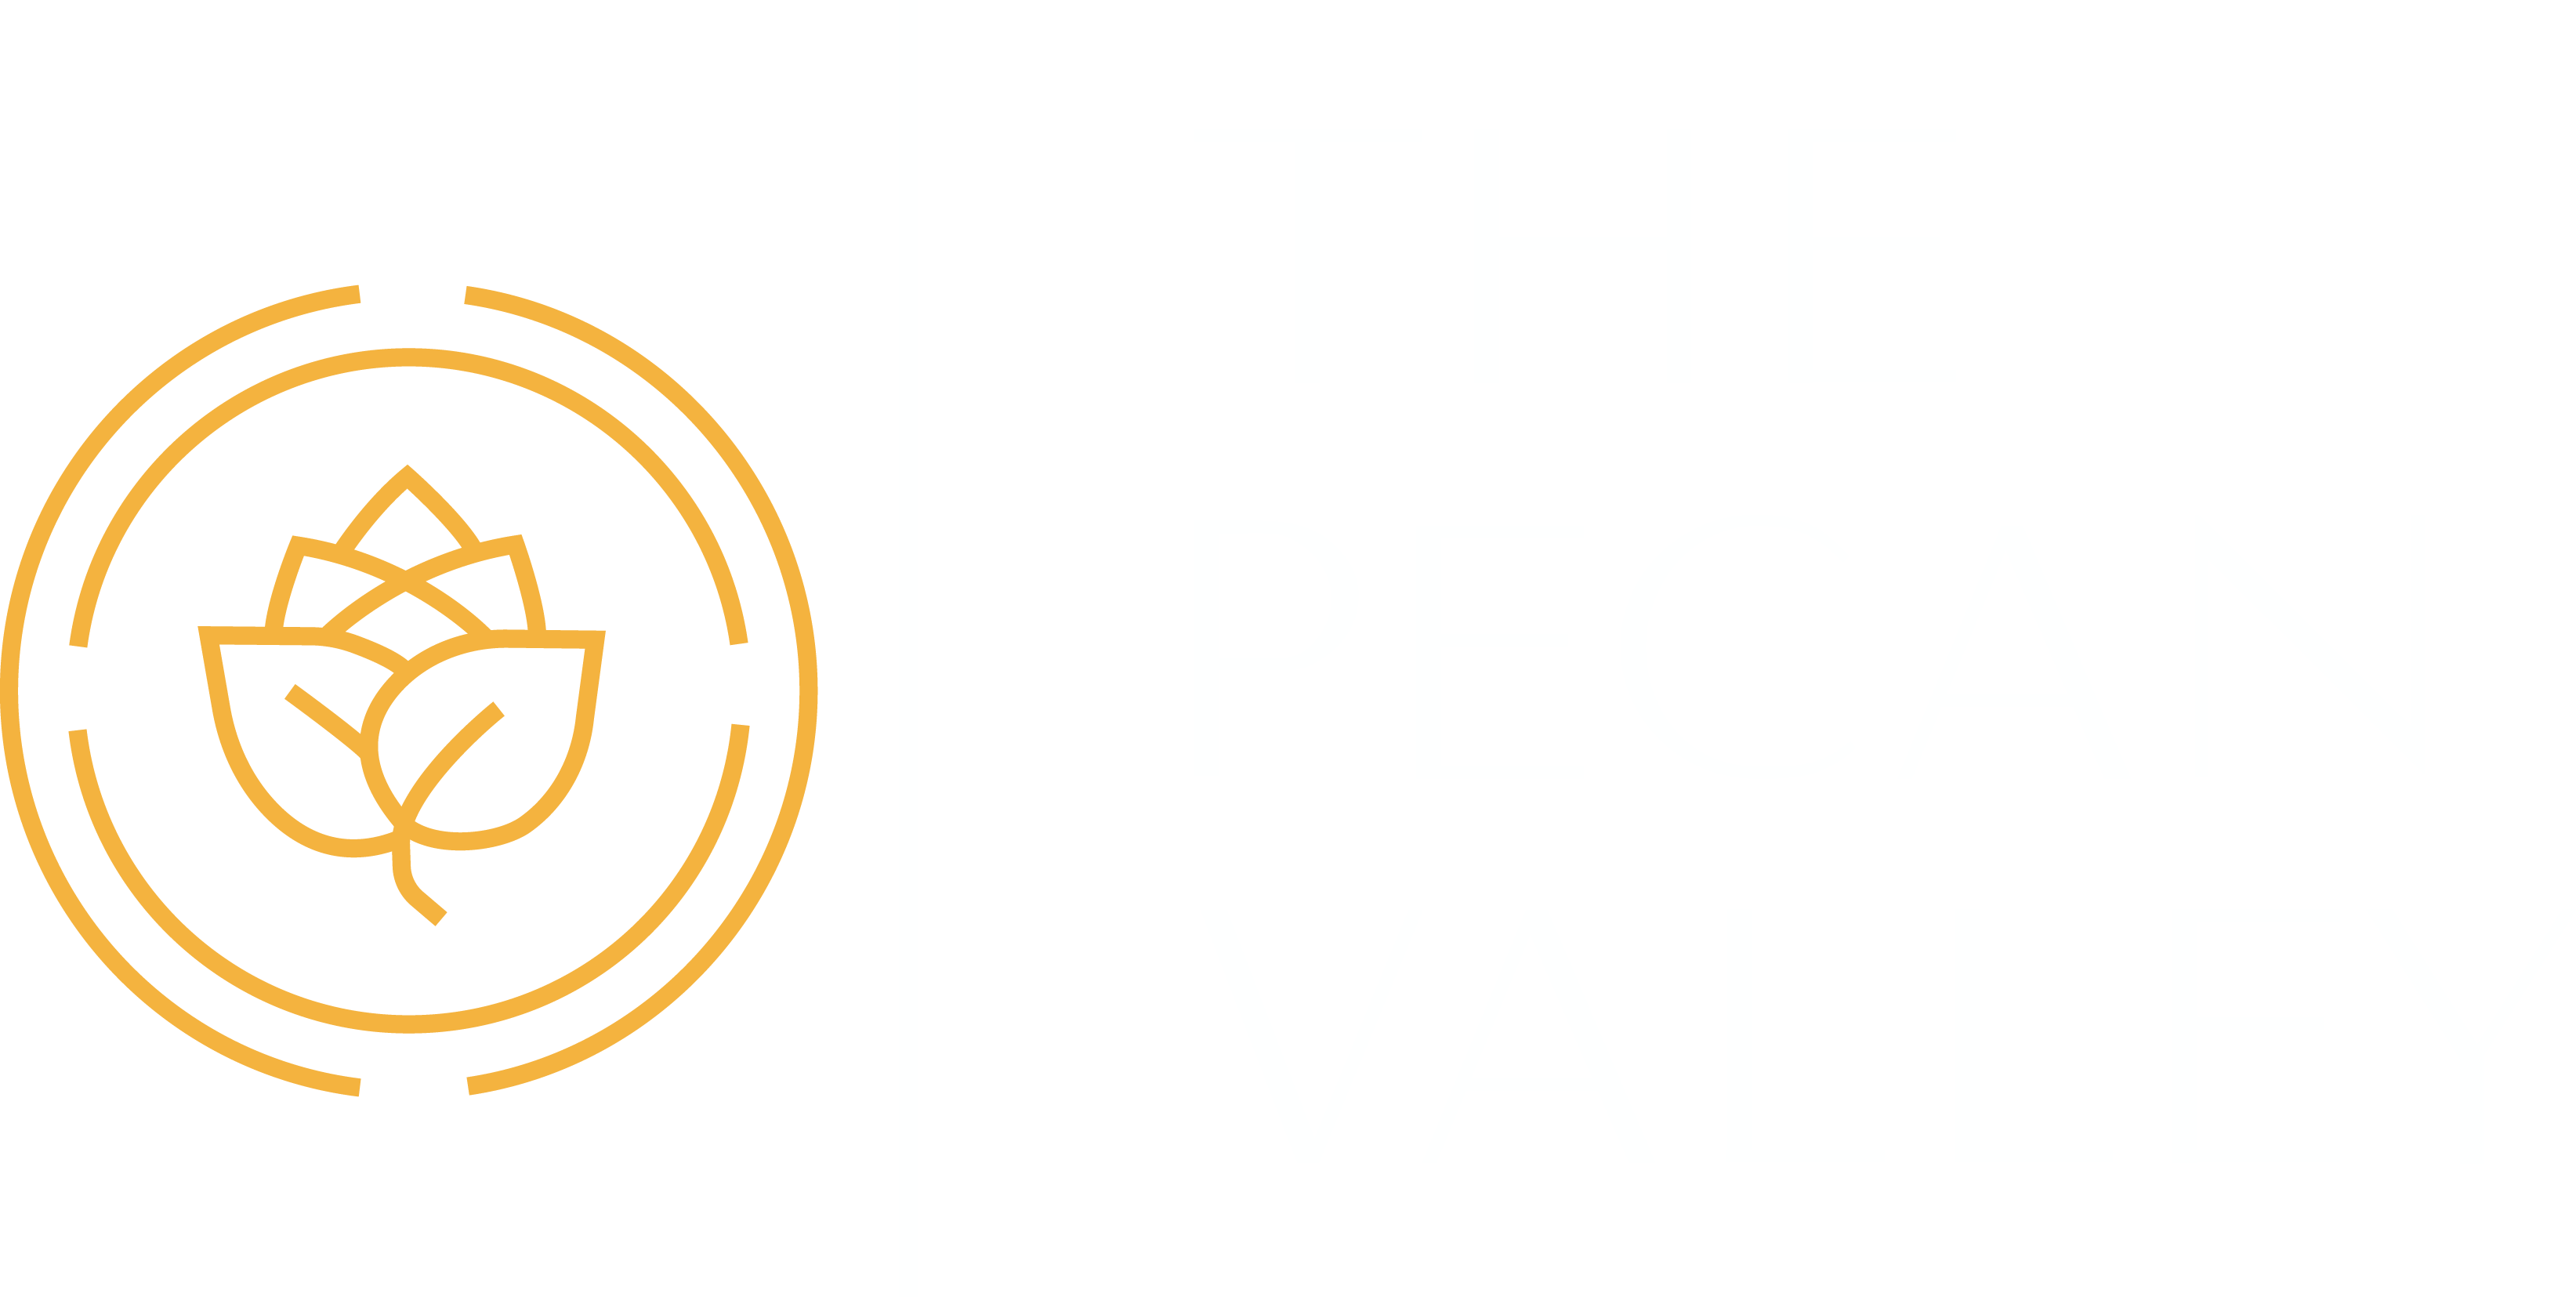 The Pecan Valley